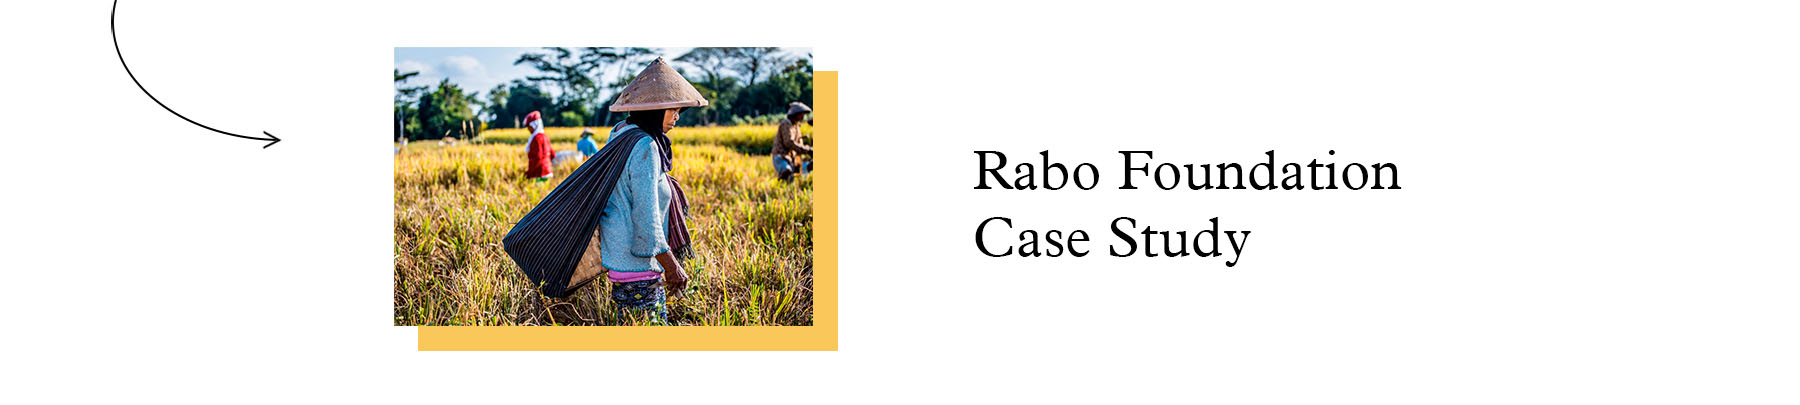 Rabo Foundation Case Study